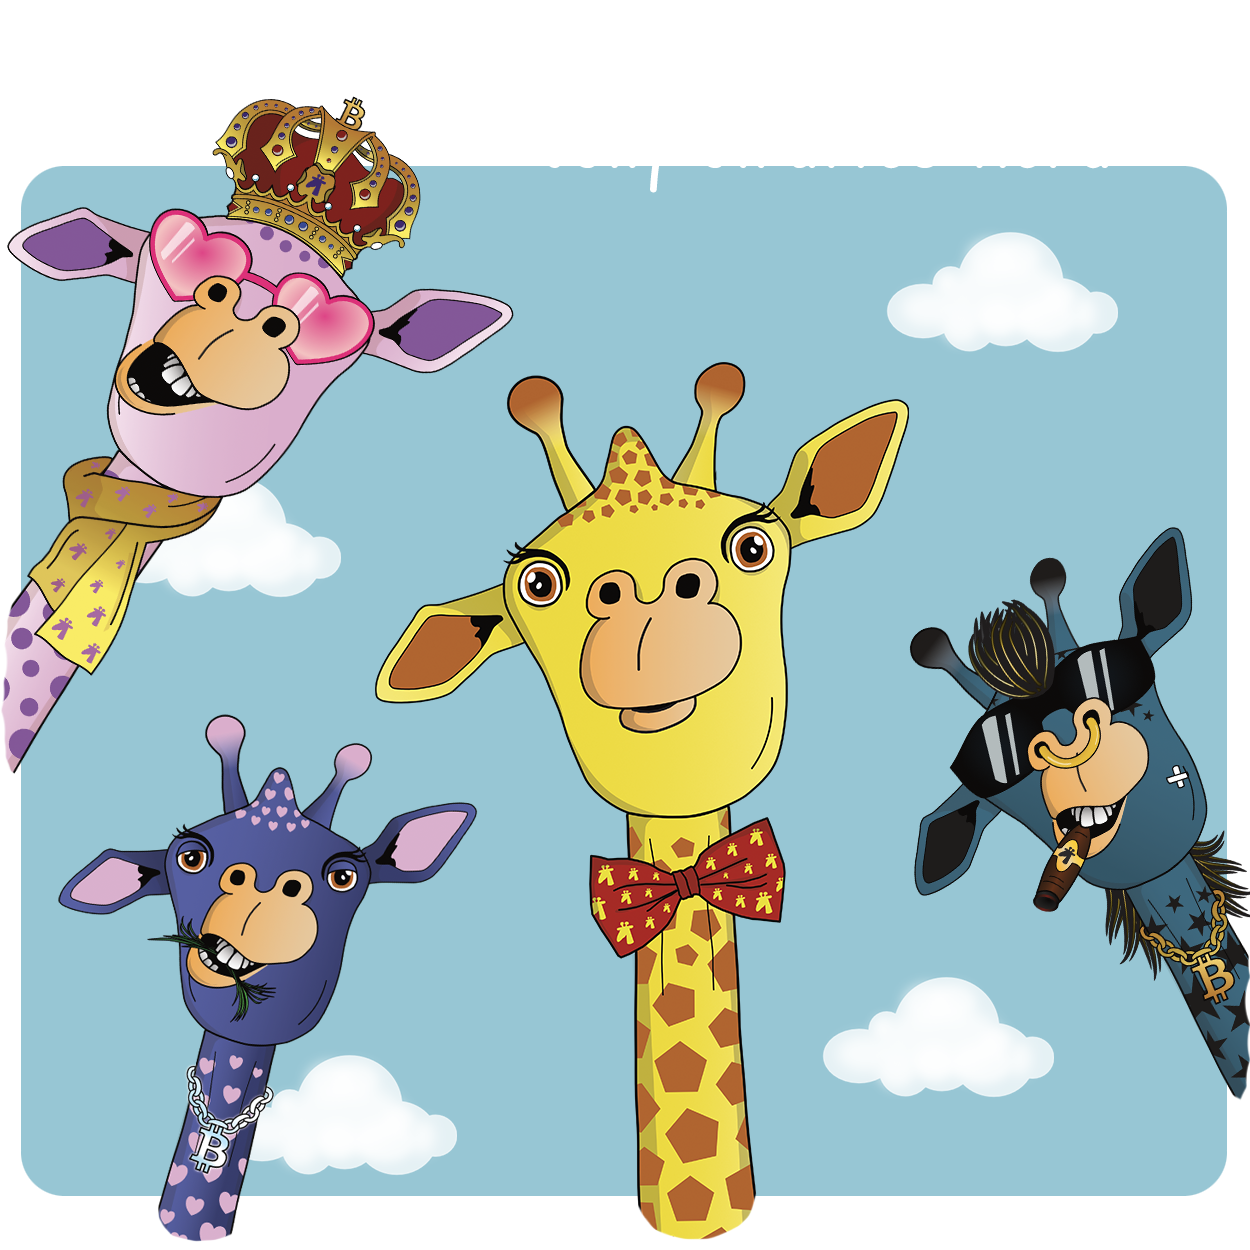 Welcome to the Jolly Giraffes NFt Herd